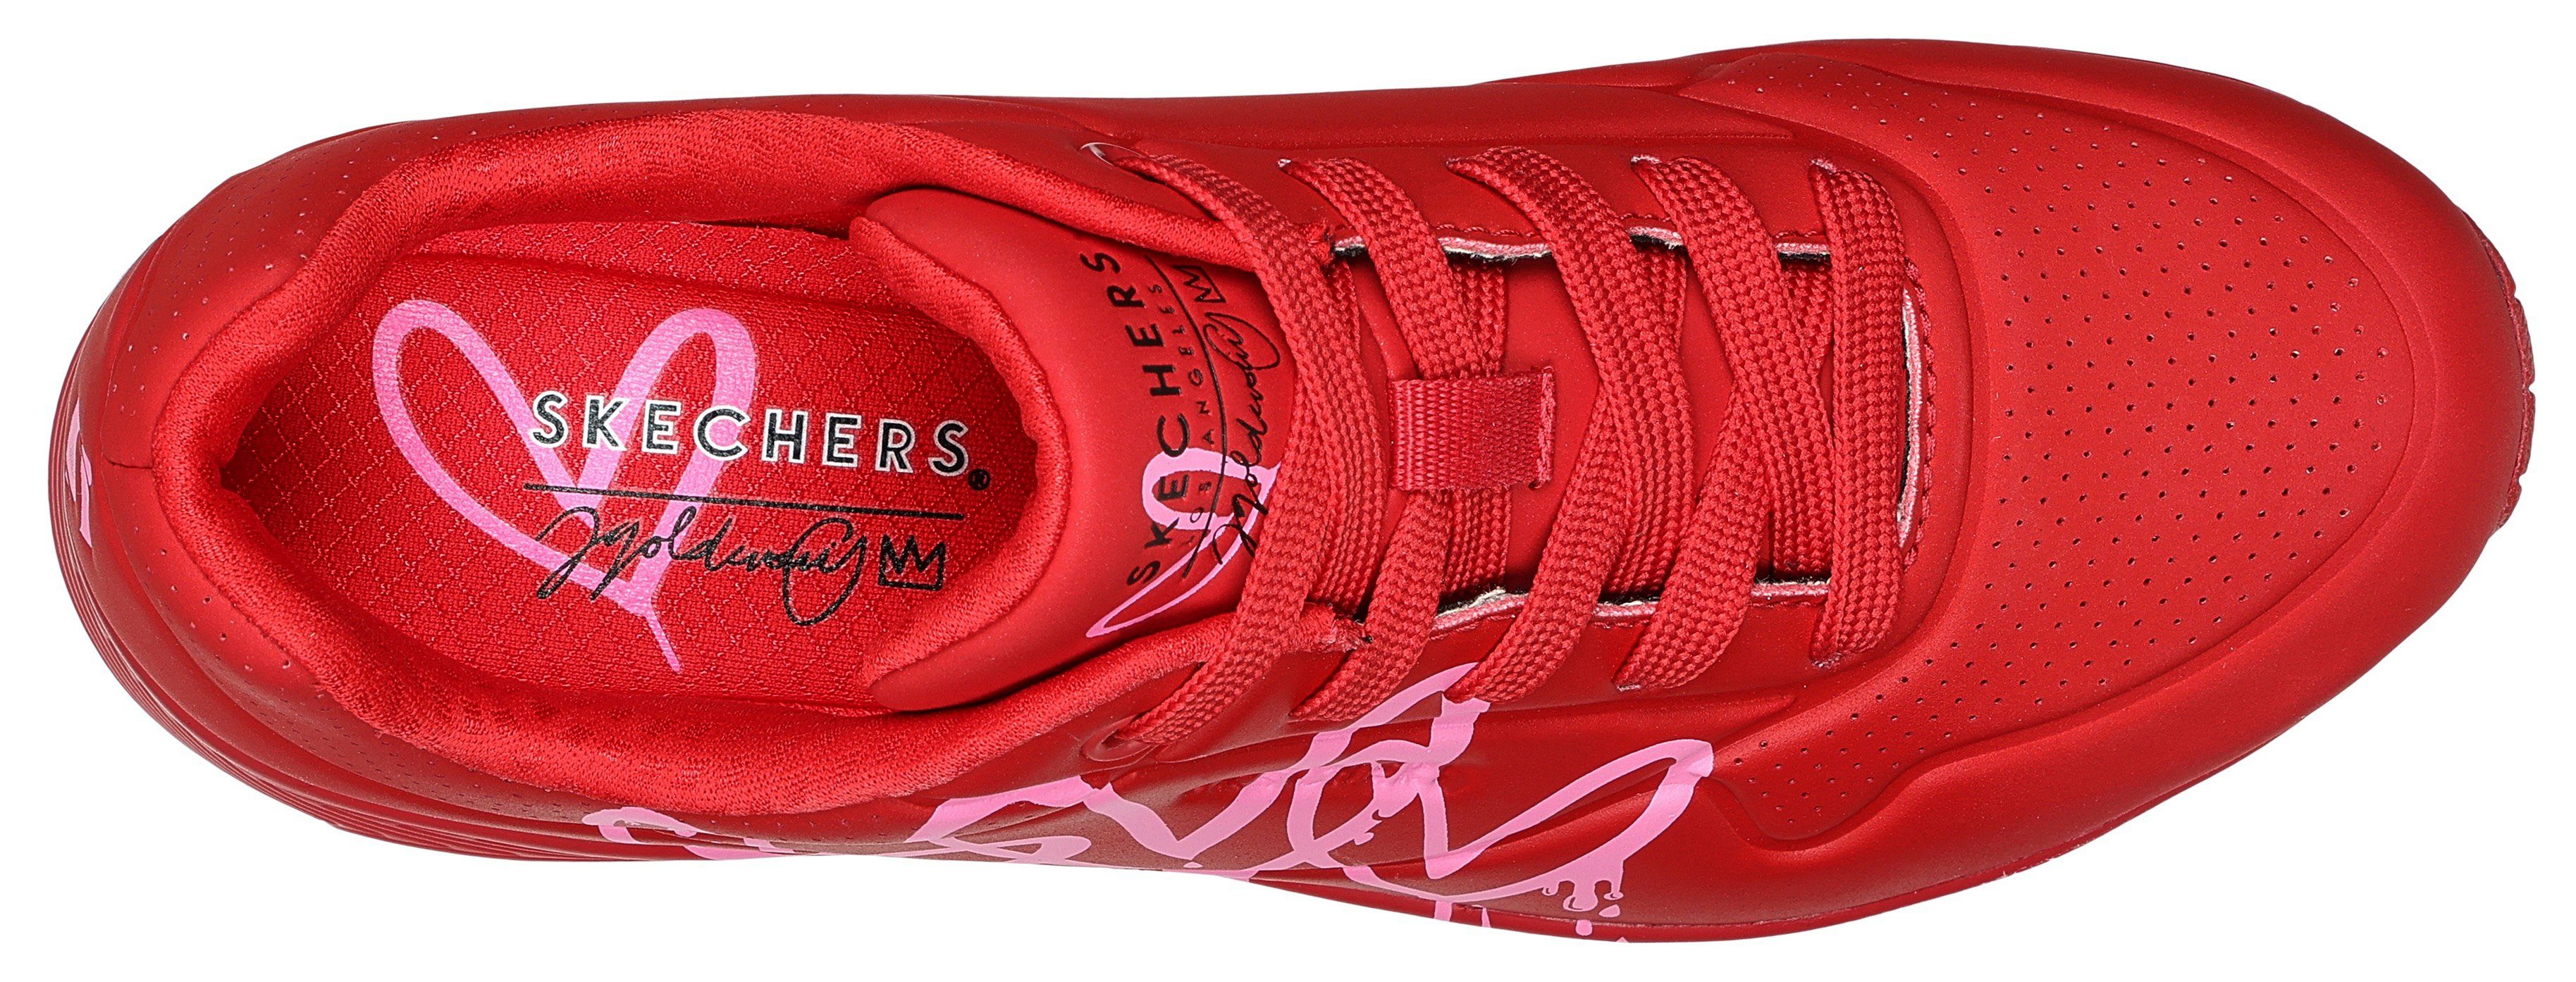 IN Skechers DRIPPING UNO mit Herzen-Graffity-Print LOVE Sneaker rot-pink